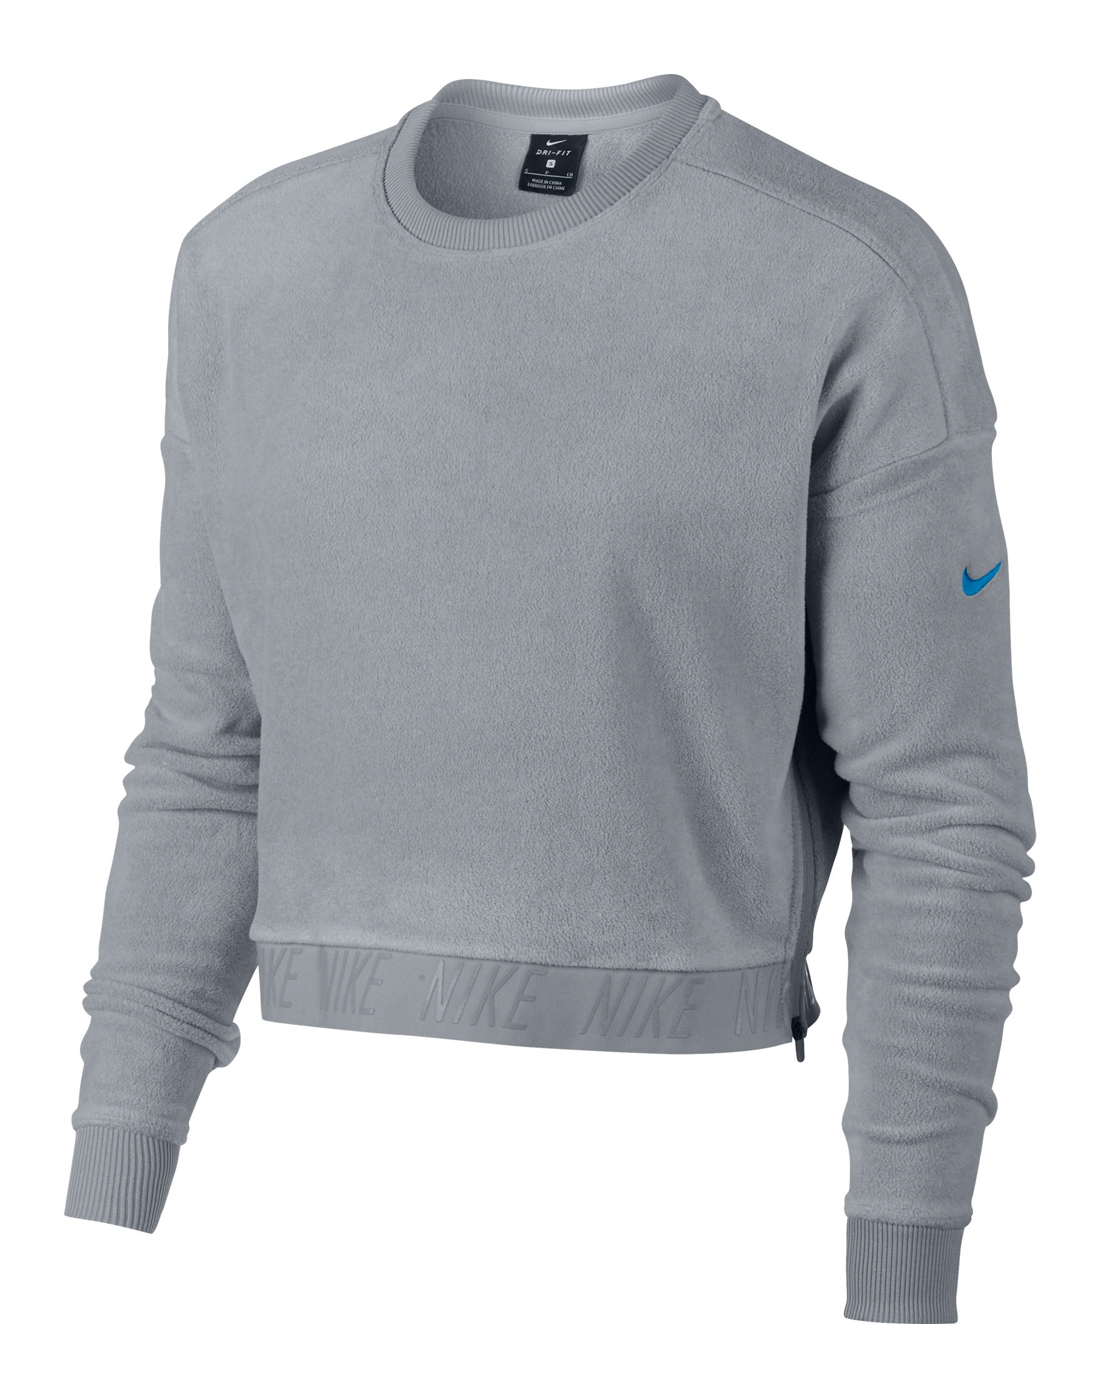 Nike Womens Long Sleeve Crew - Grey | Life Style Sports EU